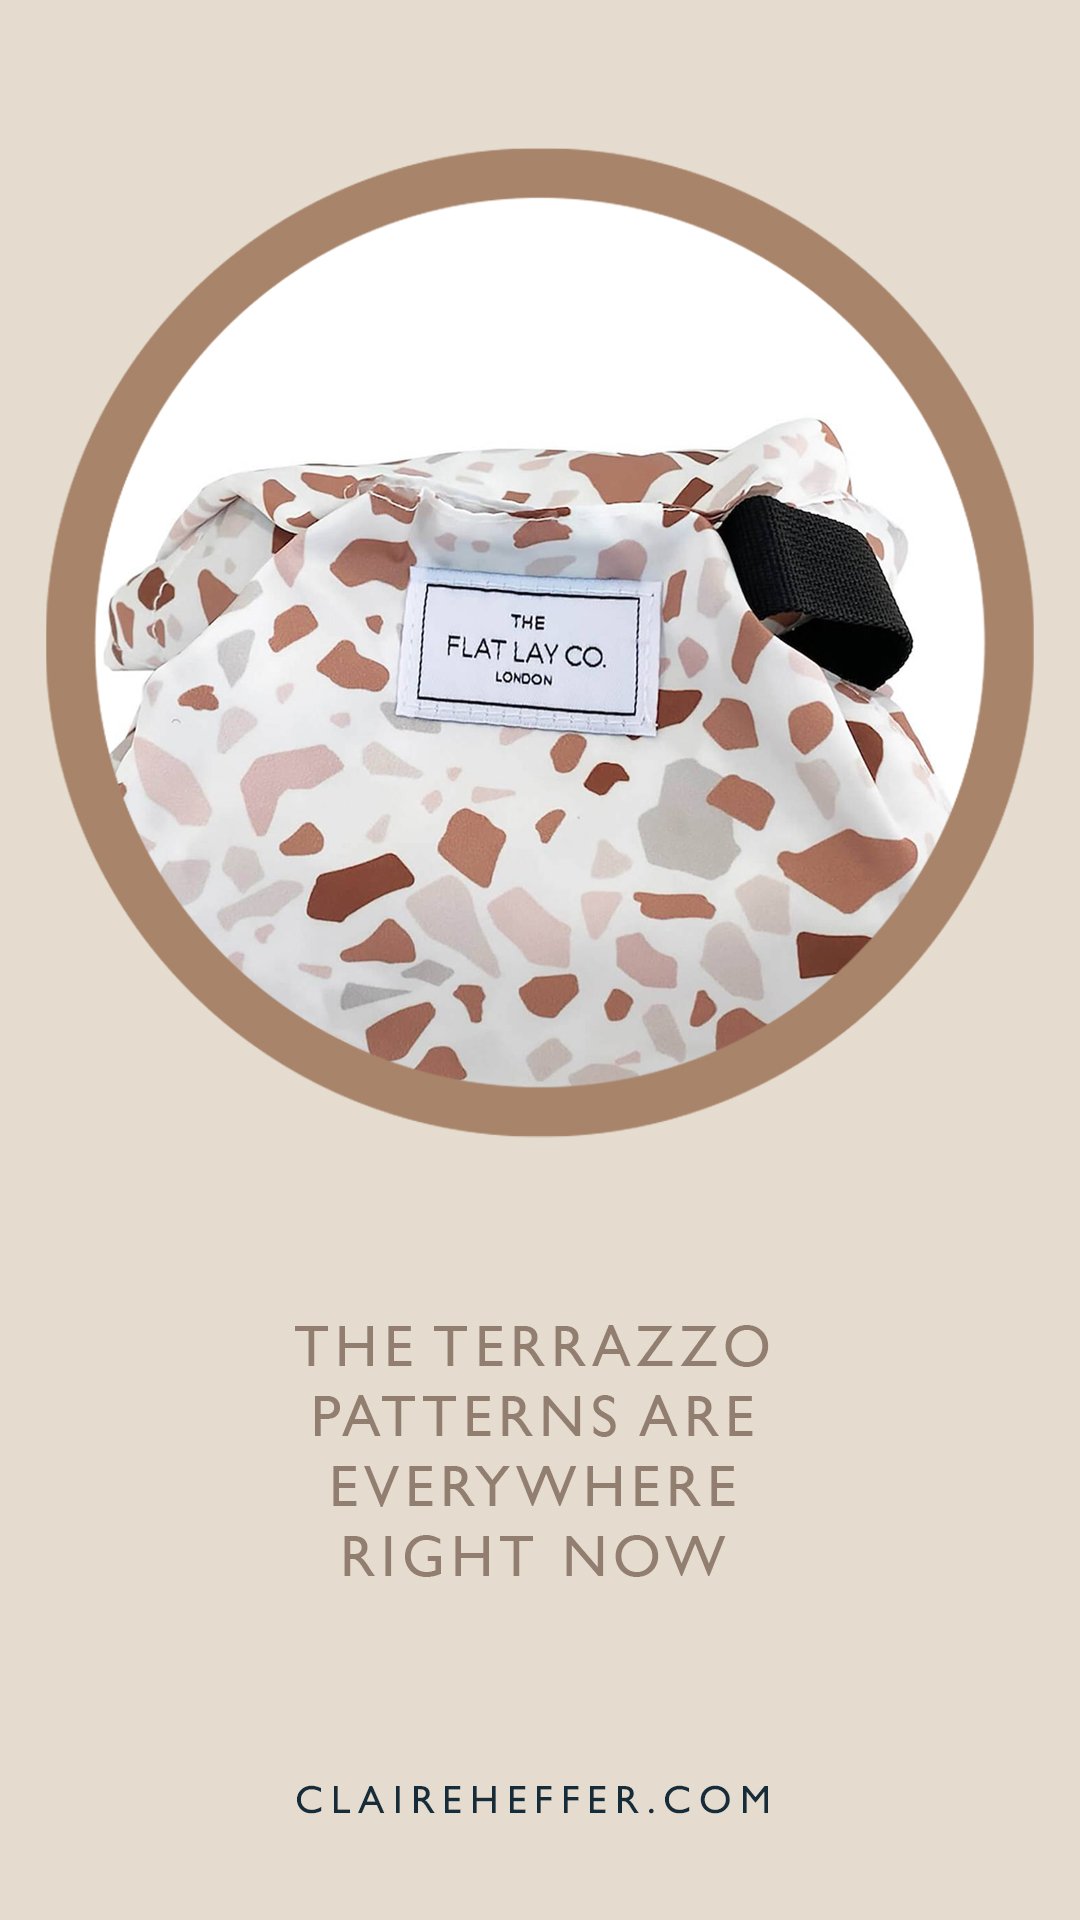  terrazzo, terrazzo trend, Examples Of Stylish Terrazzo, Stylish Terrazzo Kitchen Tops, Examples Of Unusual Terrazzo For Your Home, TerrazzoWith Unusual Materials, Creative Uses Of Terrazzo, Terrazzo Patterns In Art, Terrazzo In Art, The Terrazzo Pat